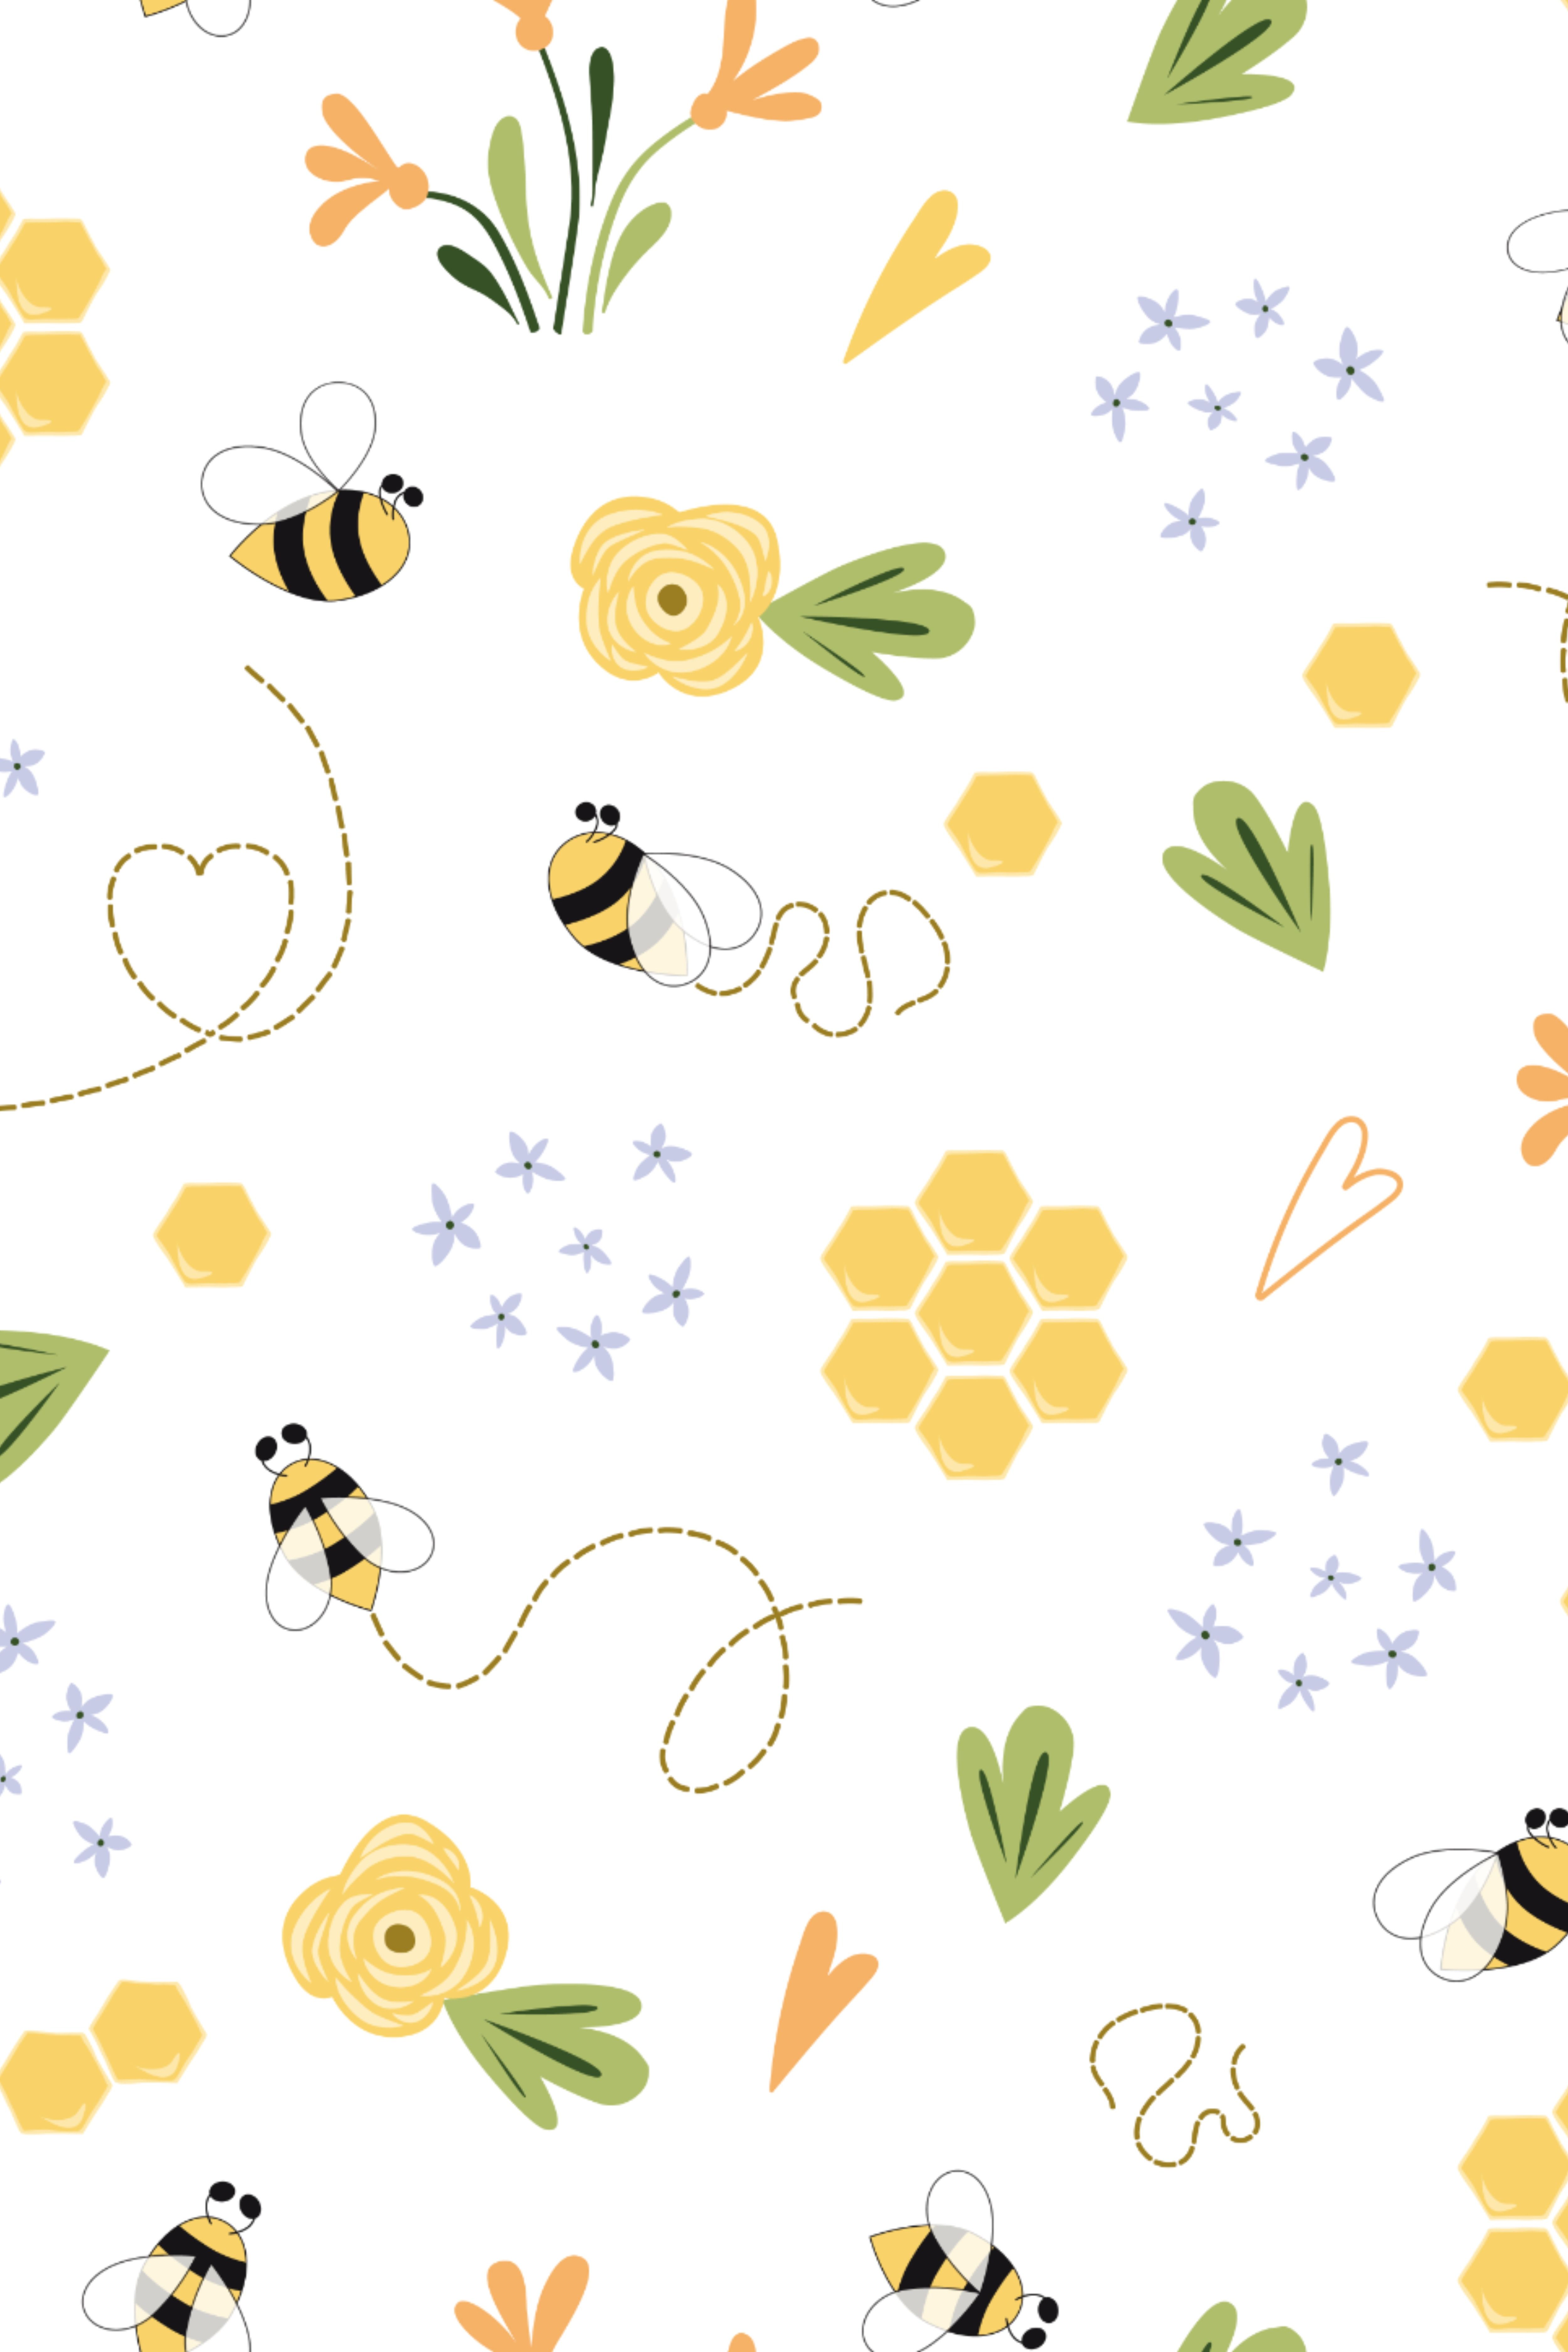 Honey Bee patterns Cute Bee. Aesthetic iphone wallpaper, Pretty wallpaper, iPhone background wallpaper